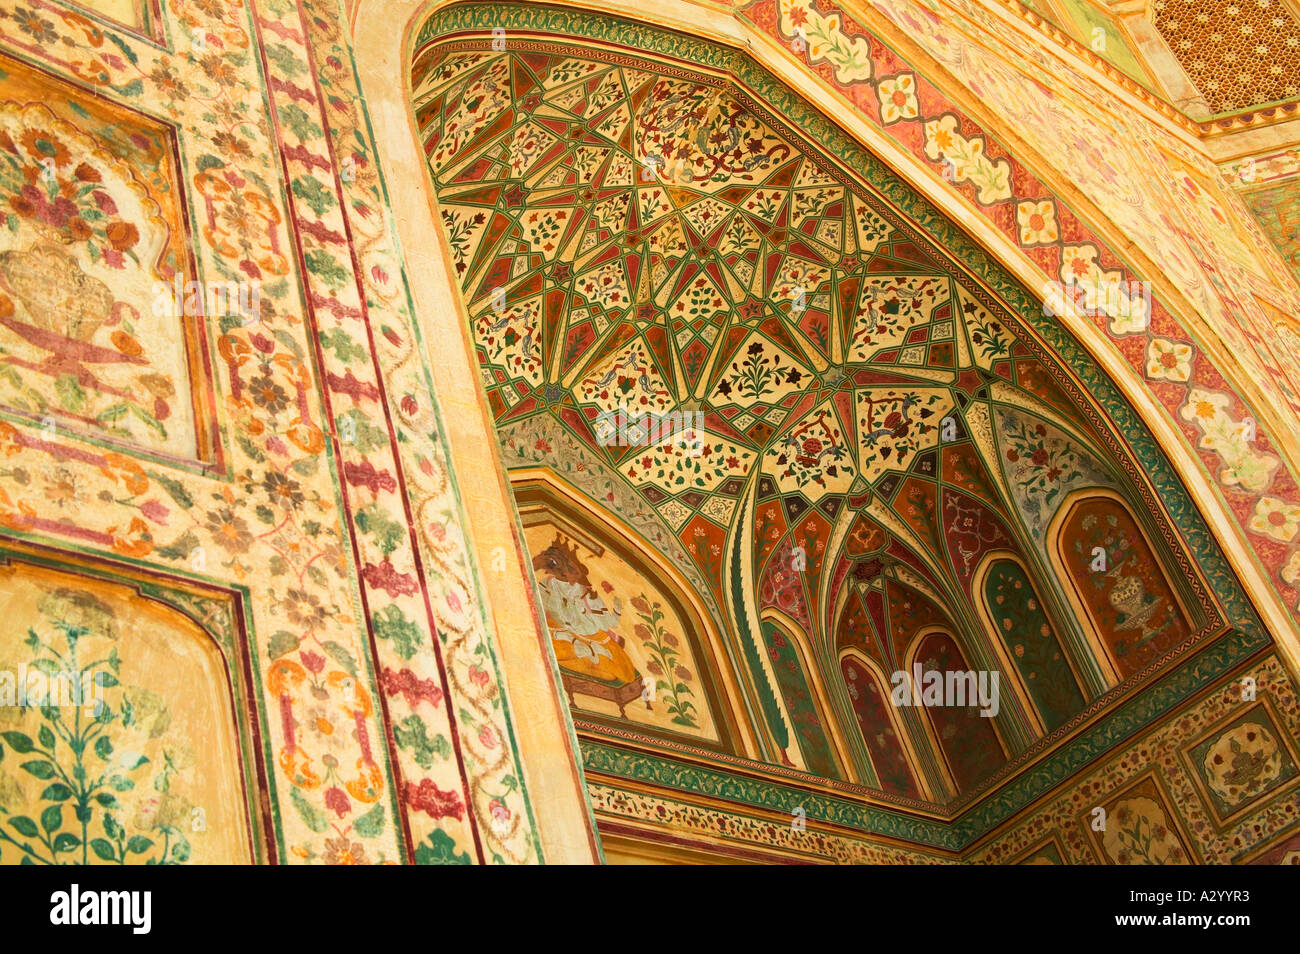 Ornate arcade decorated with tileworks inside Amber Palace Jaipur Rajasthan India Stock Photo